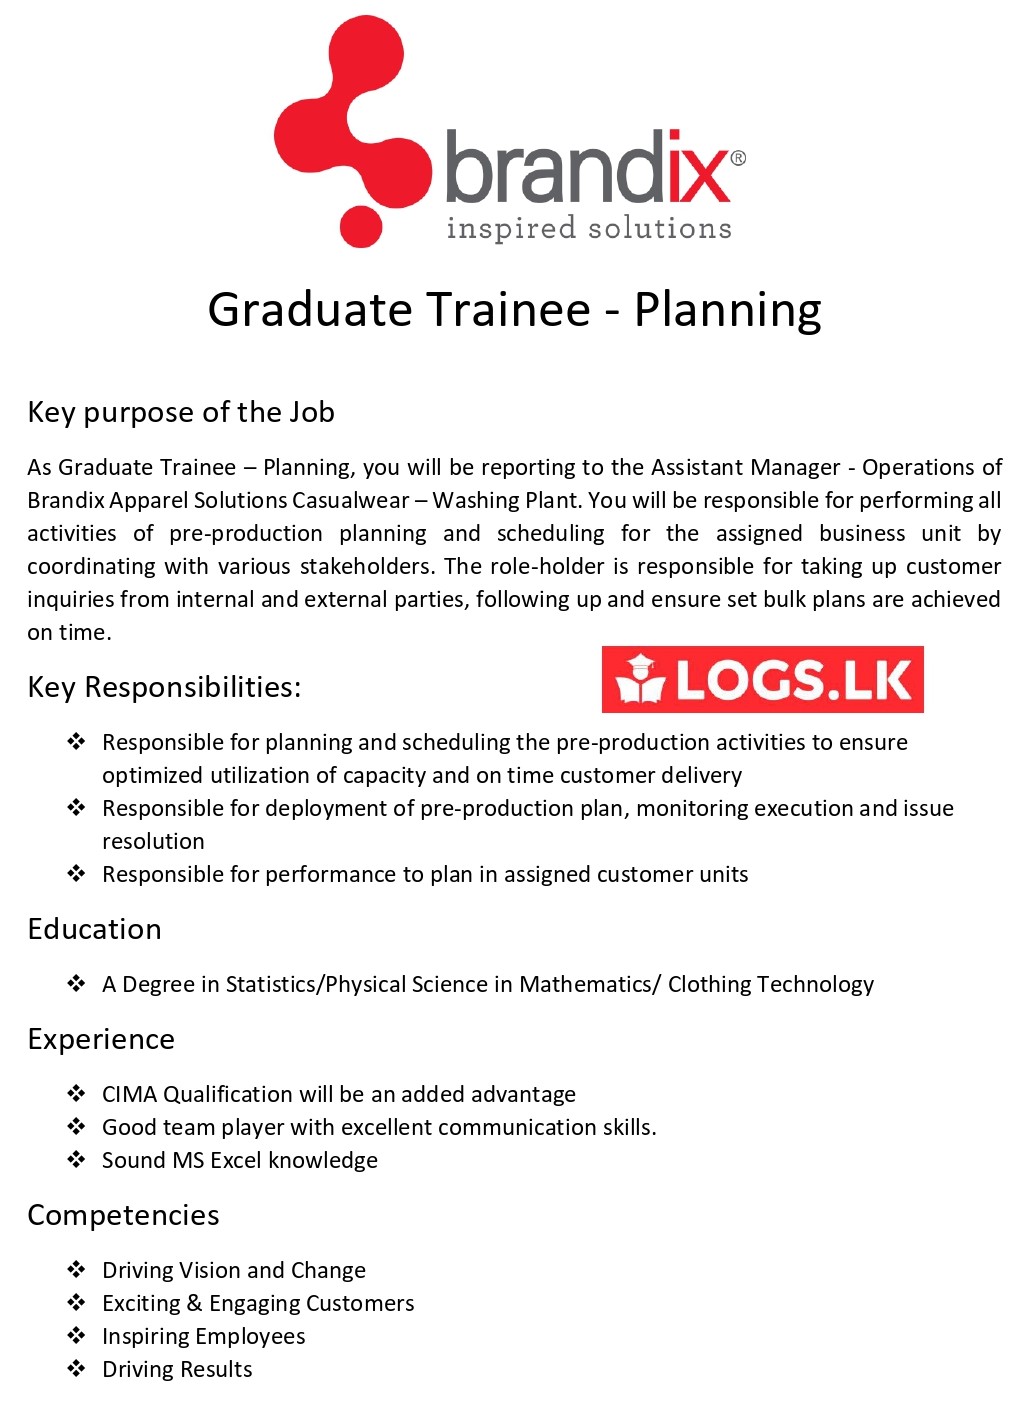 Graduate Trainee (Planning) Jobs Vacancies - Brandix Sri Lanka Jobs Vacancies Details